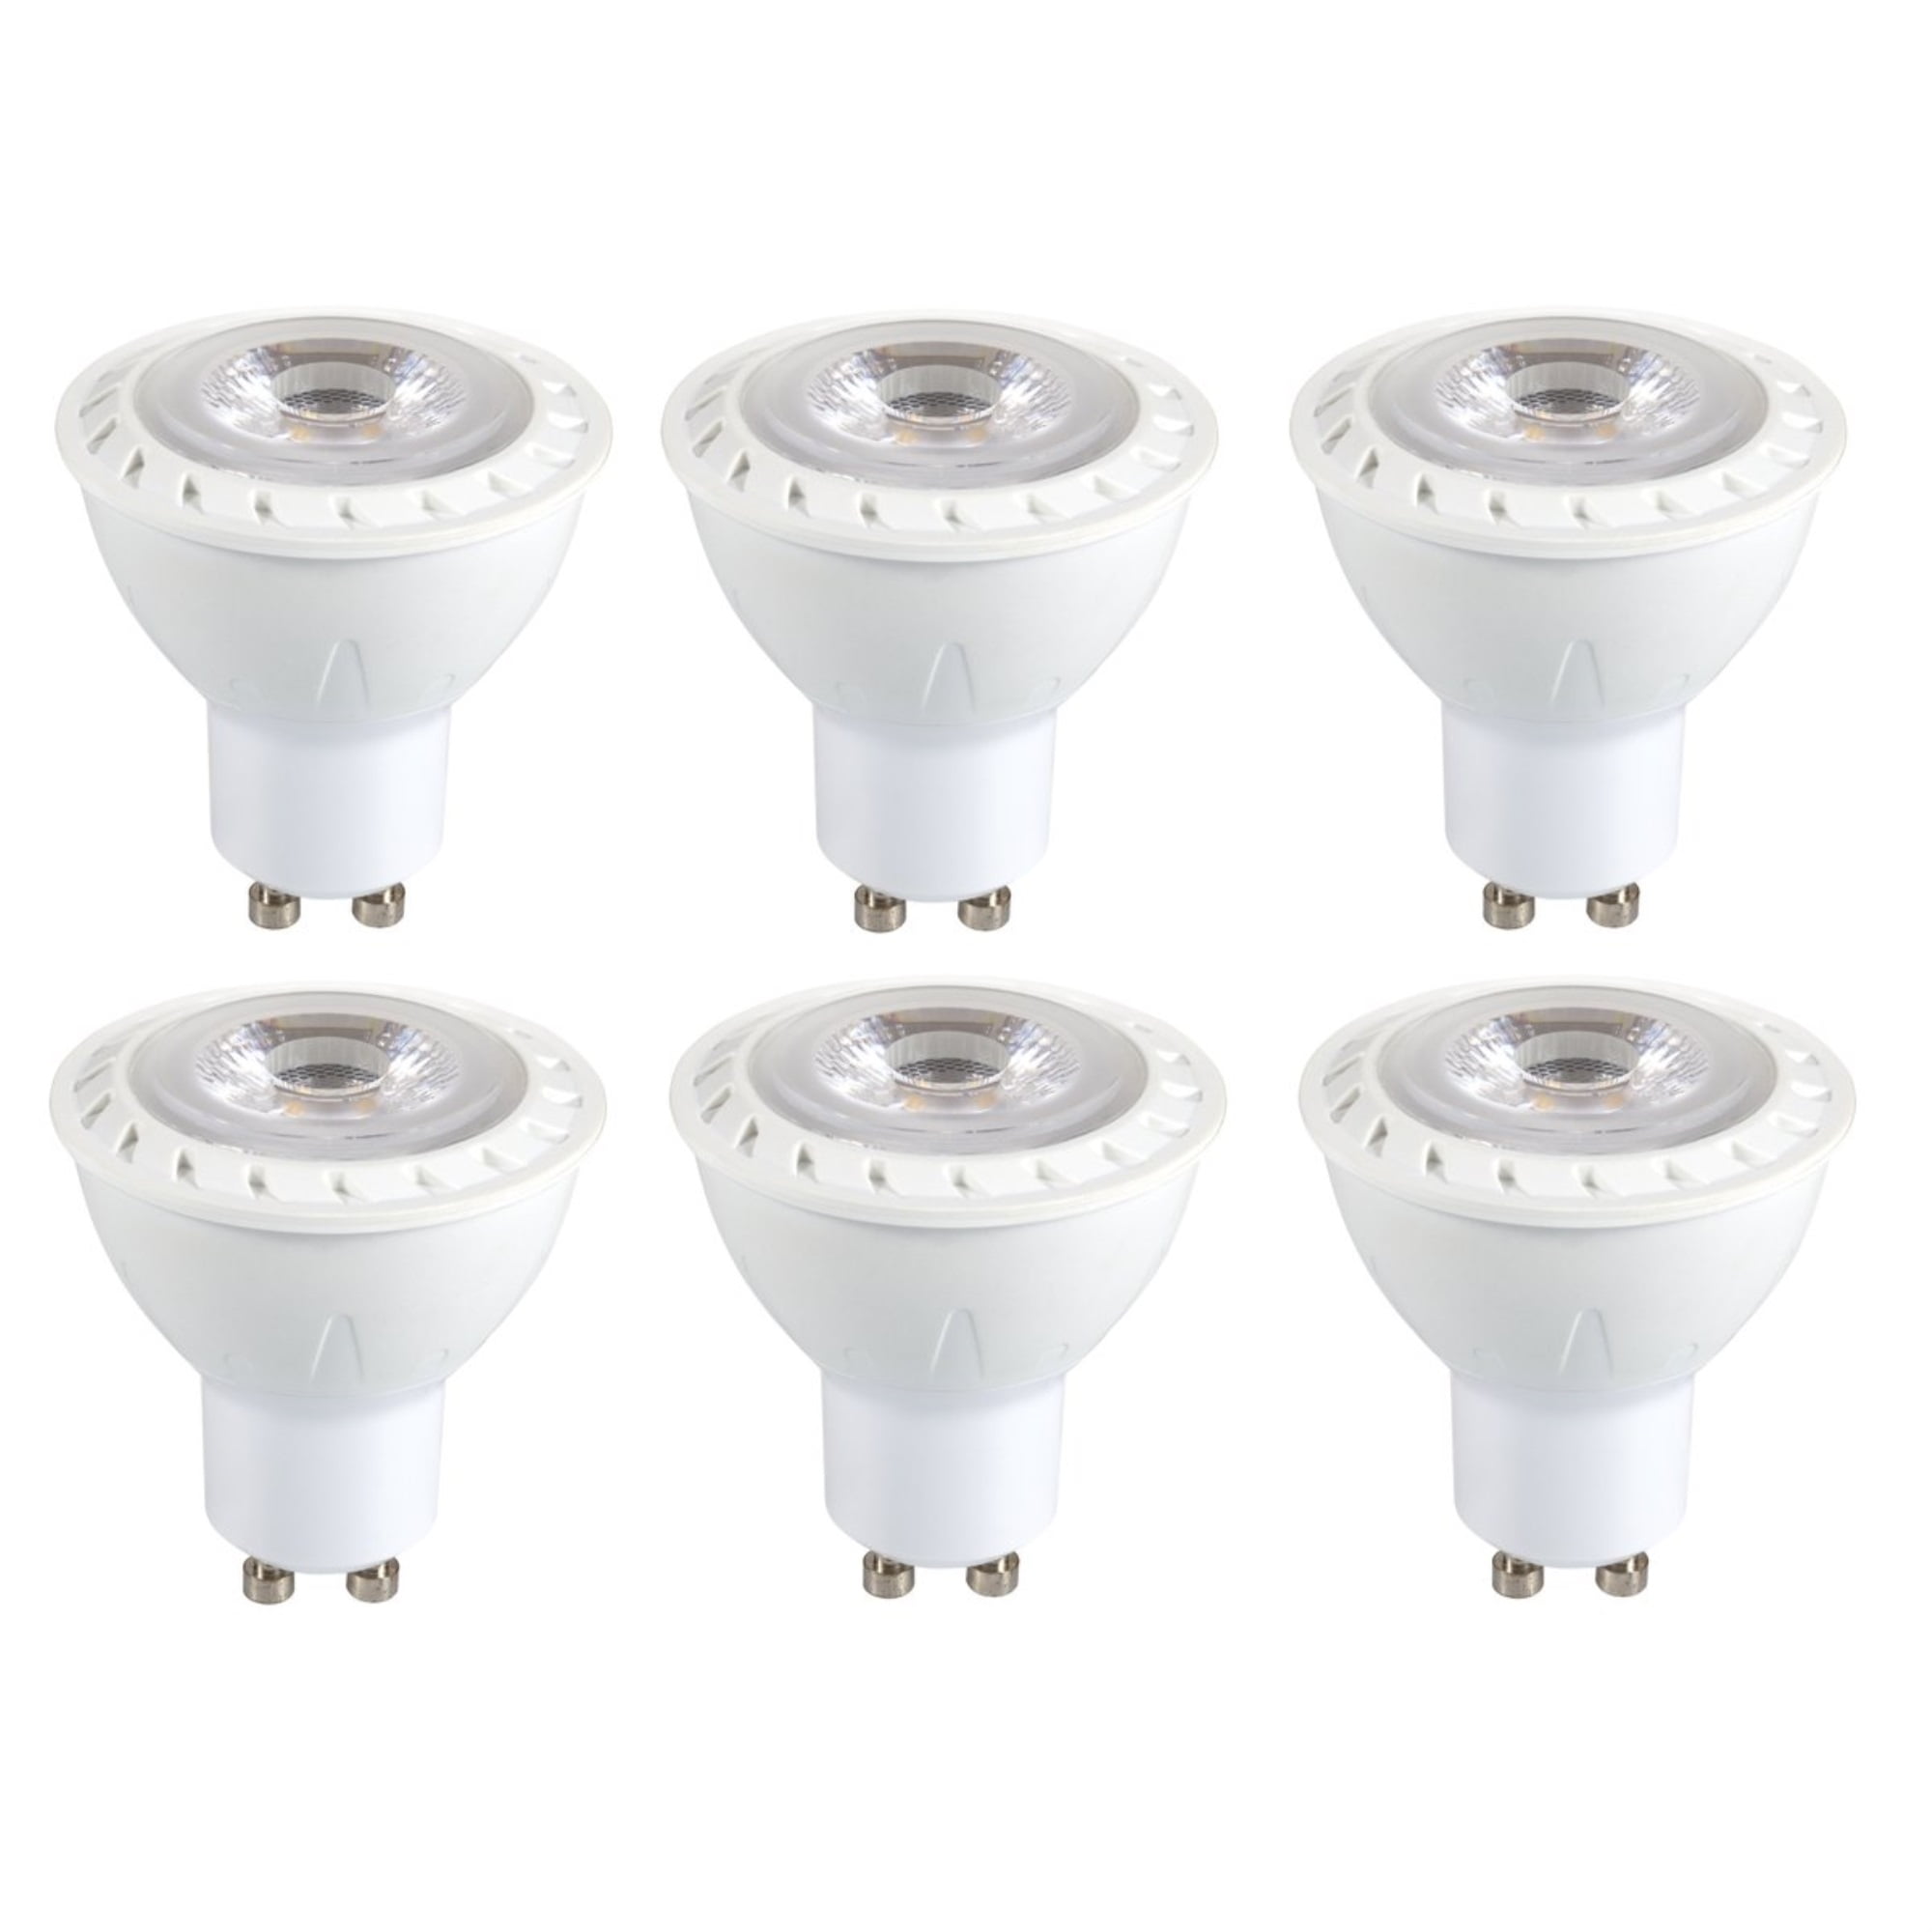 LED GU10 light bulb, 5000K, CRI80, ETL, 7W, 50W EQUIVALENT, 25000HRS, LM520, DIMMABLE, INPUT VOLTAGE 120V 6 PACK - Walmart.com